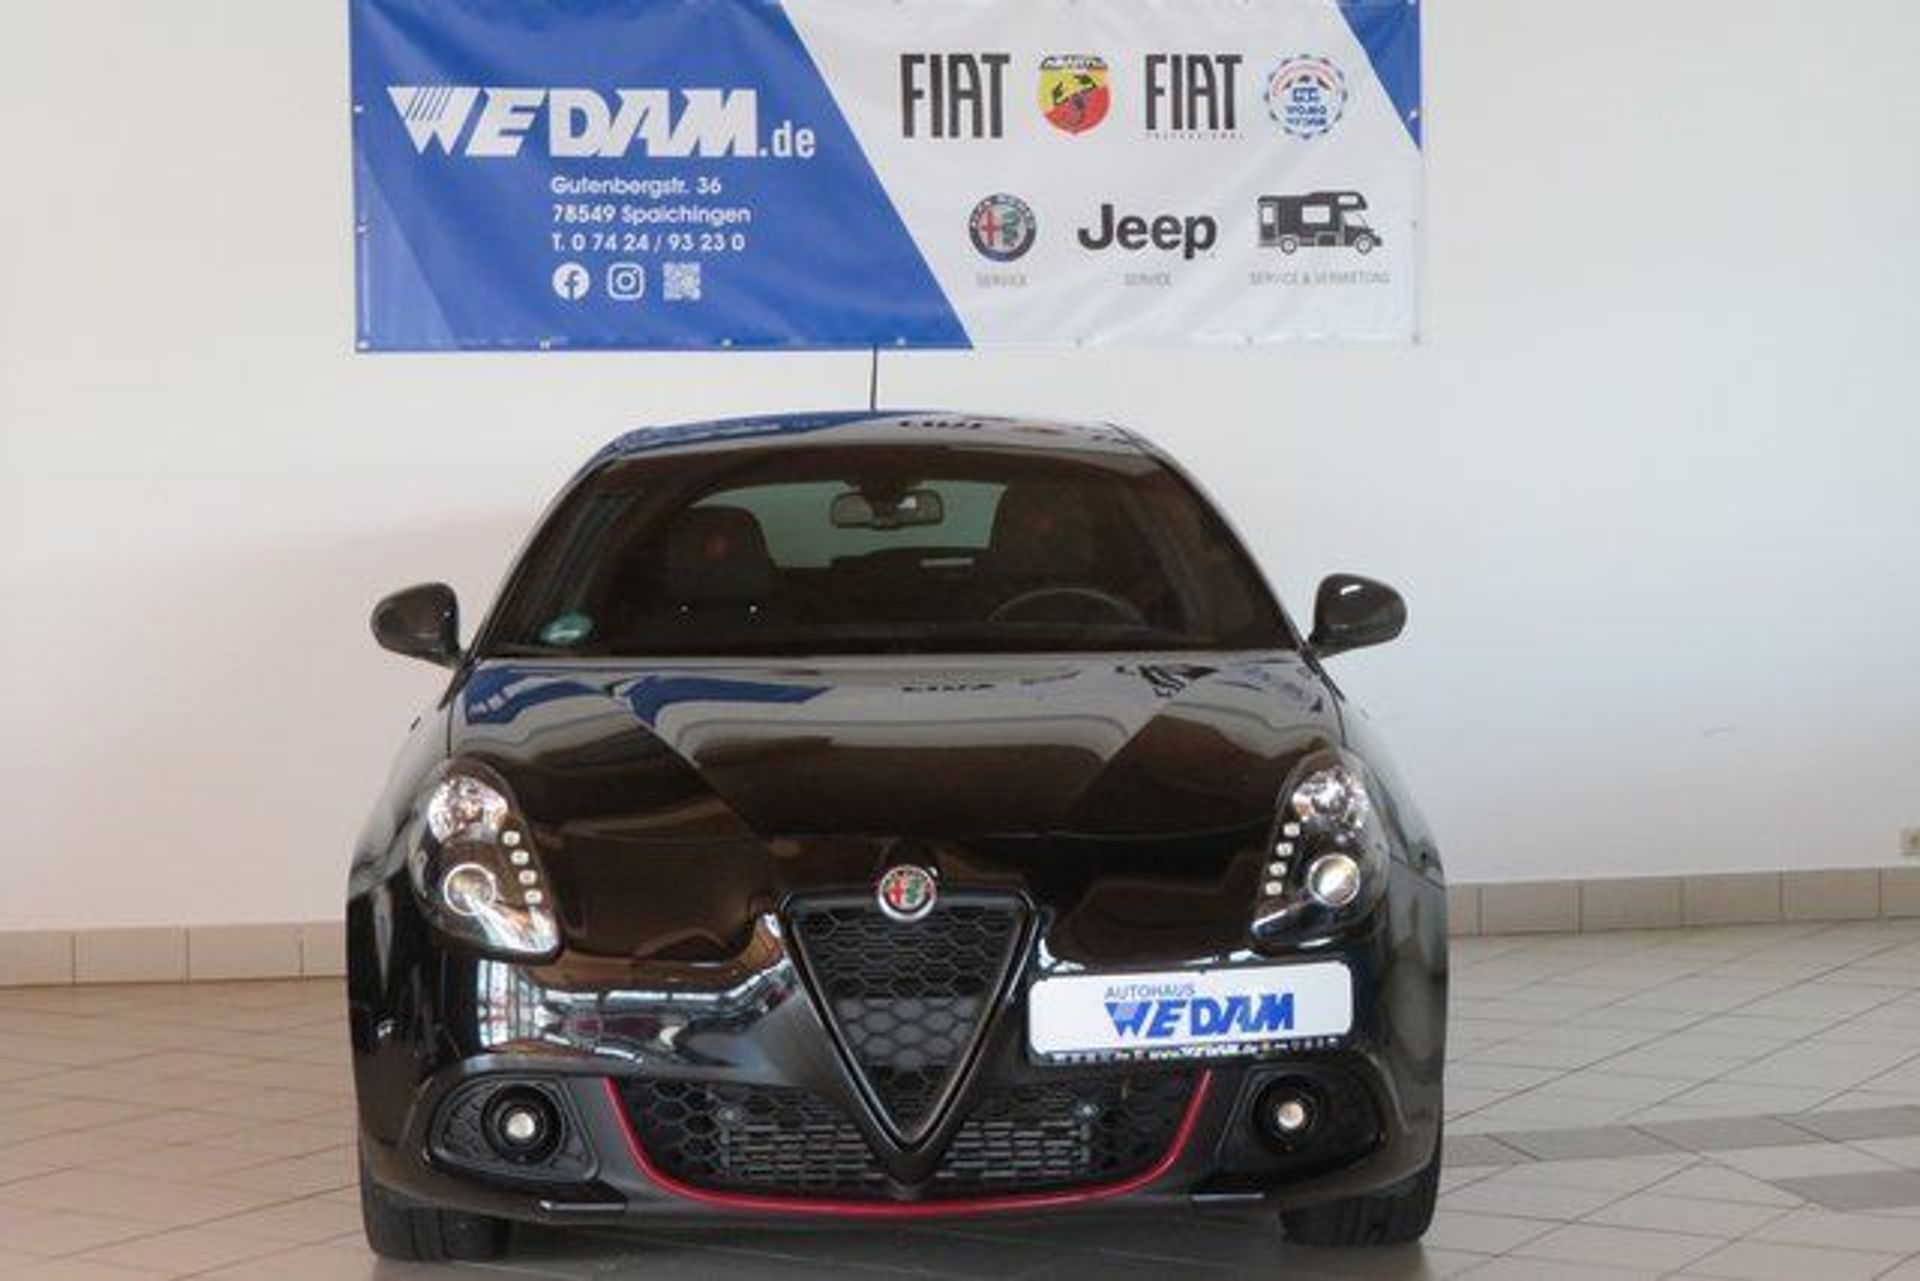 Acquista Alfa romeo Giulietta usate a Emilia romagna - Autosupermarket